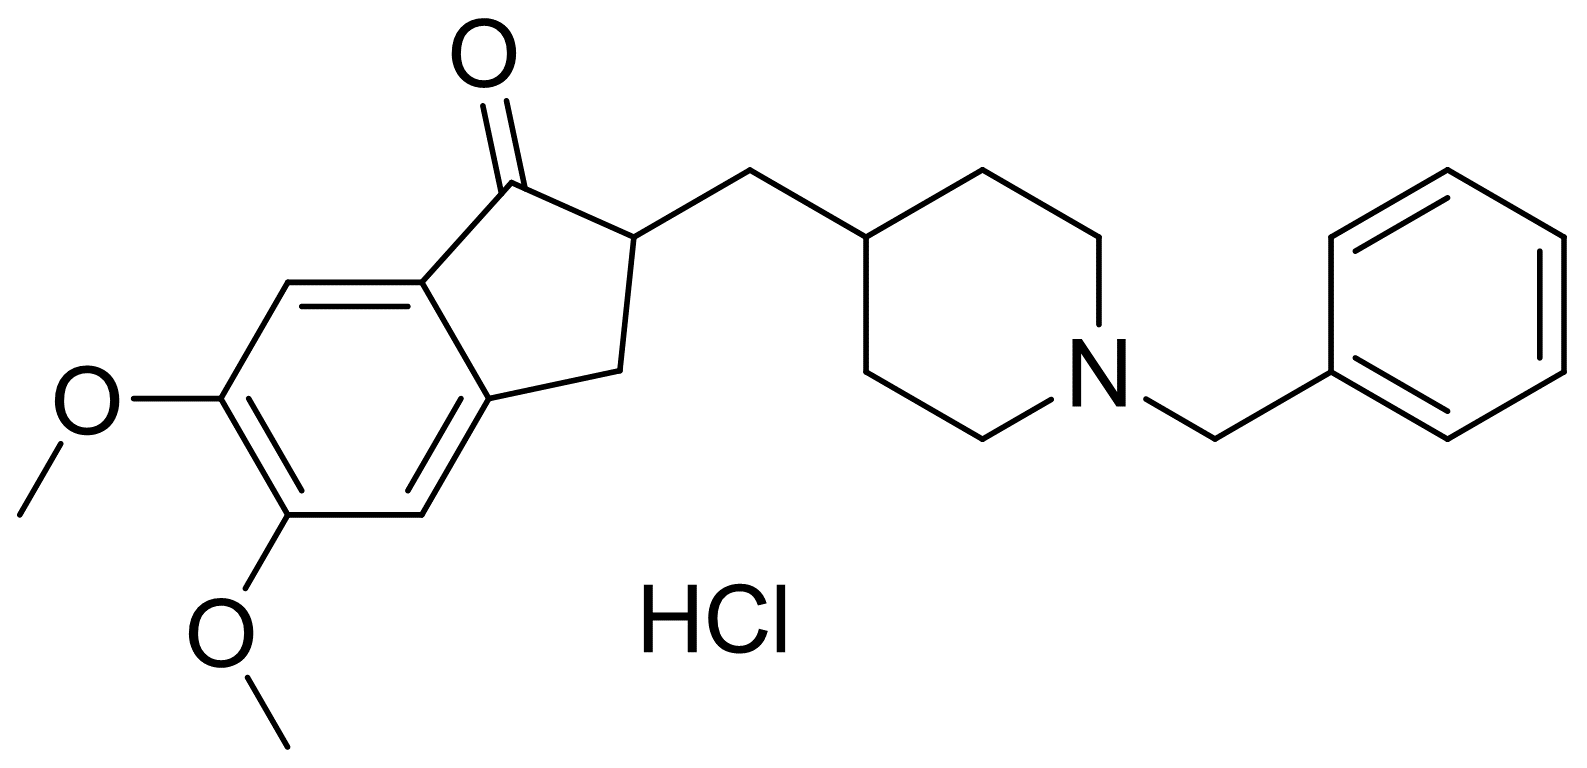 2,3-dihydro-5,6-dimethoxy-2-{[1-(phemylmethyl)-4-piperidinyl]methyl}-1H-indan-1-one HCL